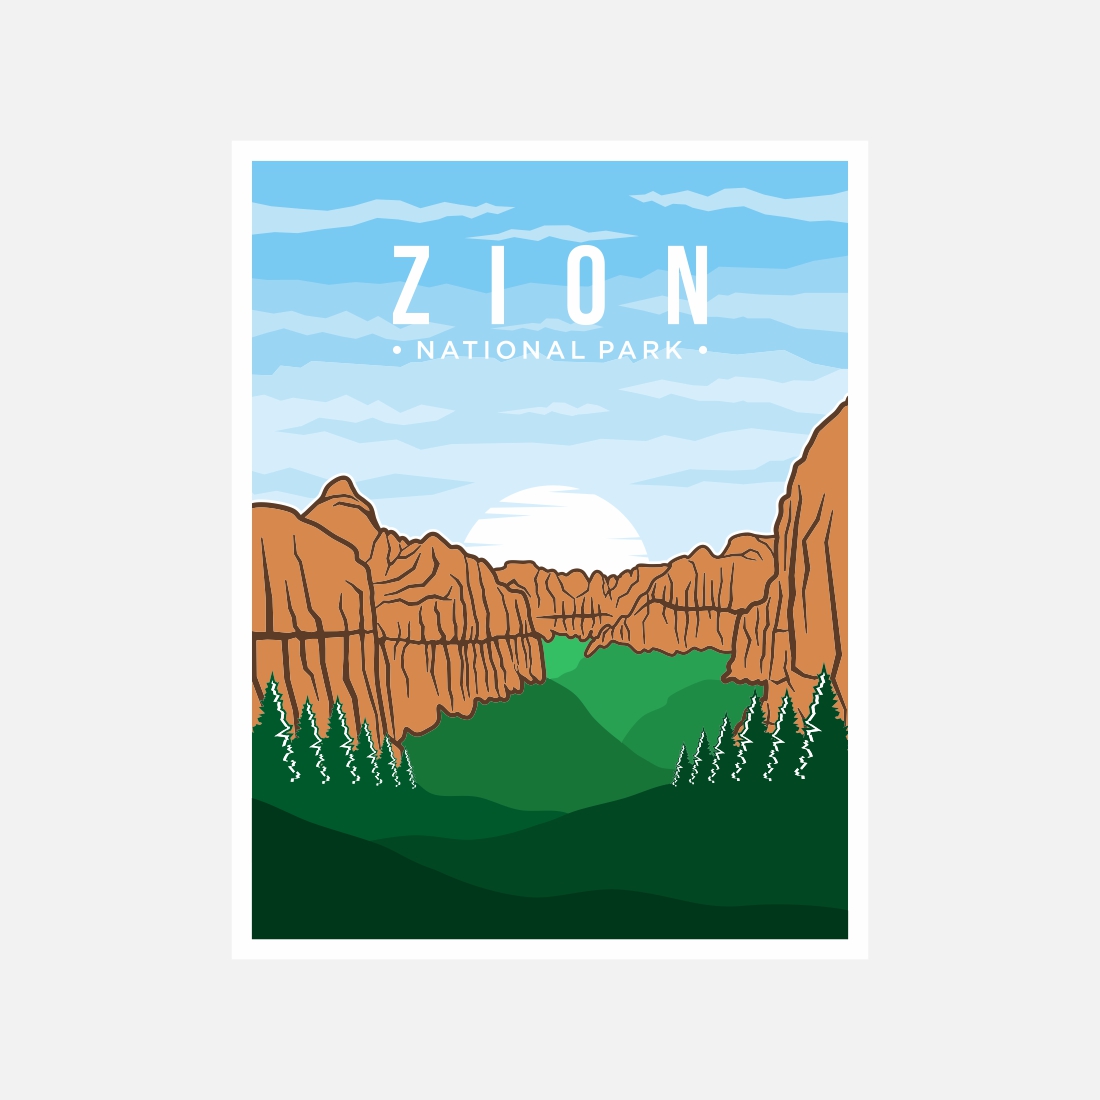 Zion National Park poster vector illustration design – Only $8 cover image.